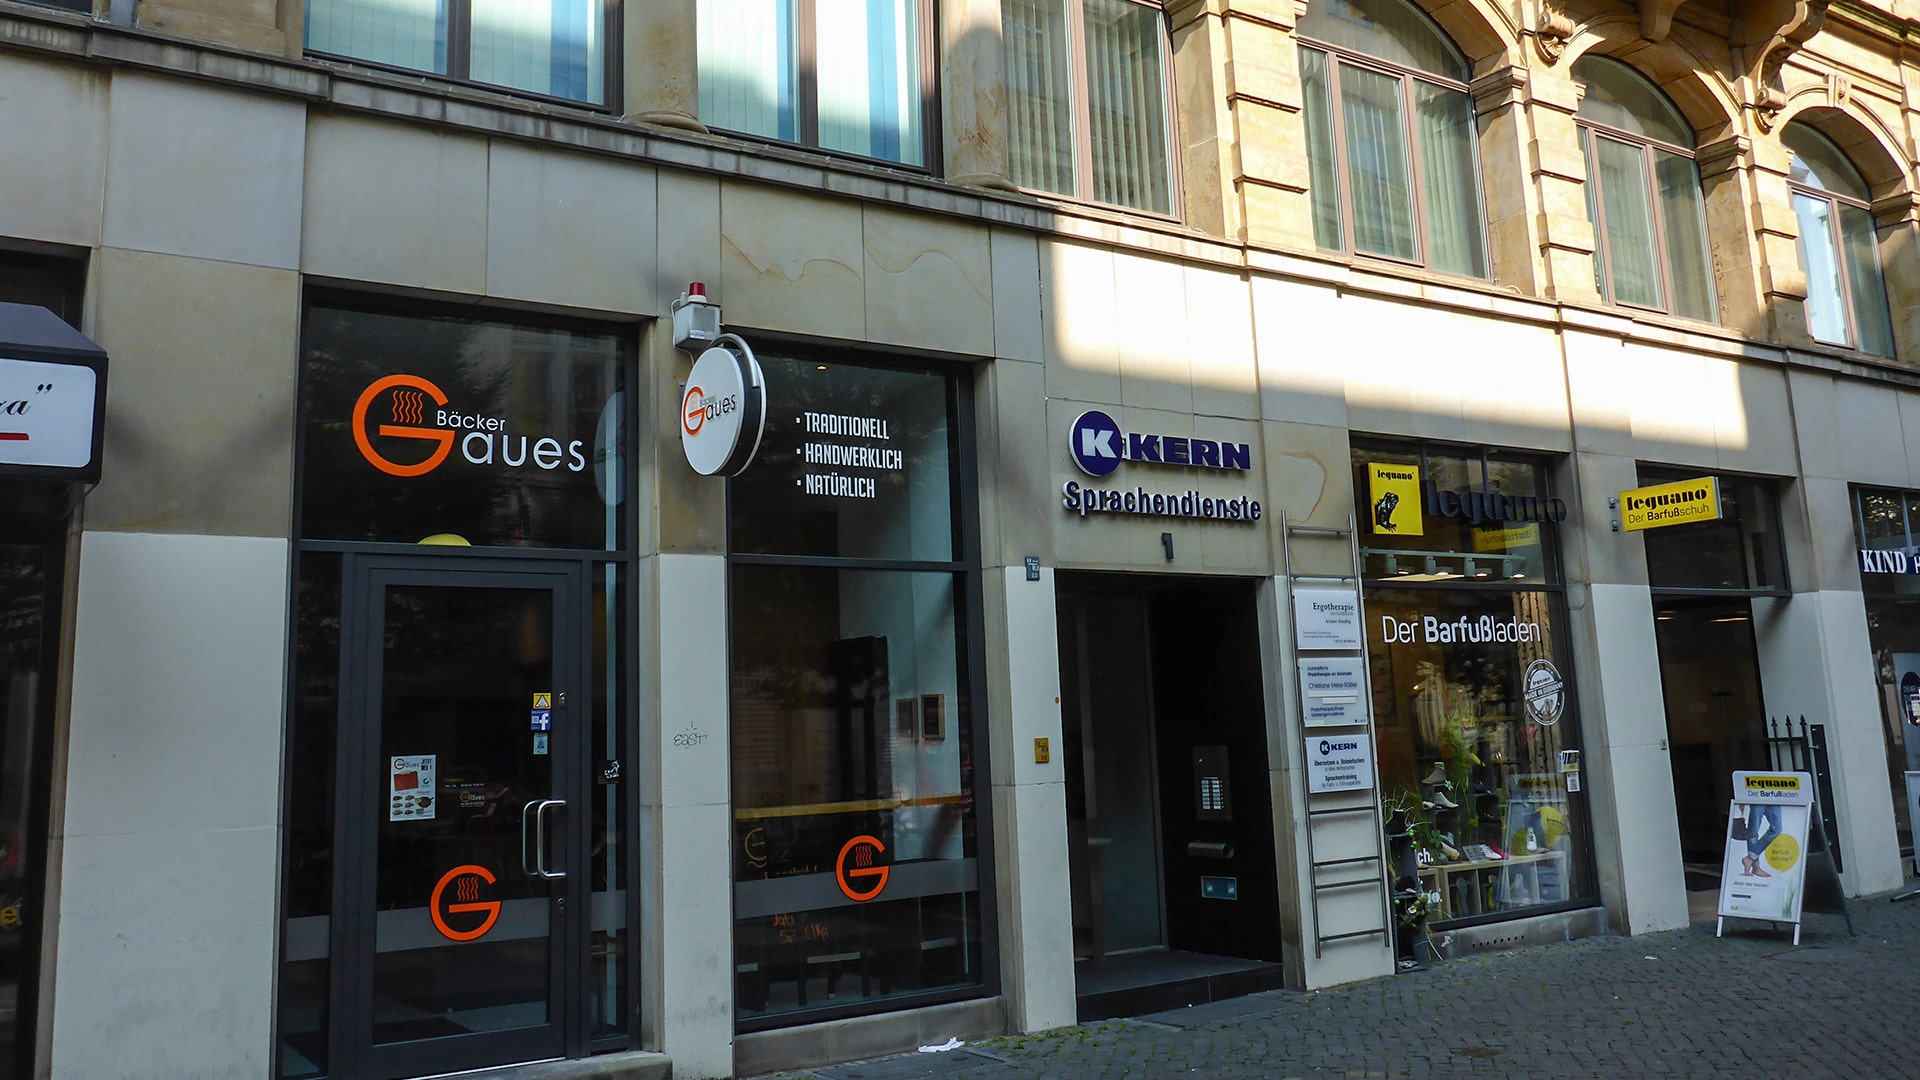 Duisburg translation office